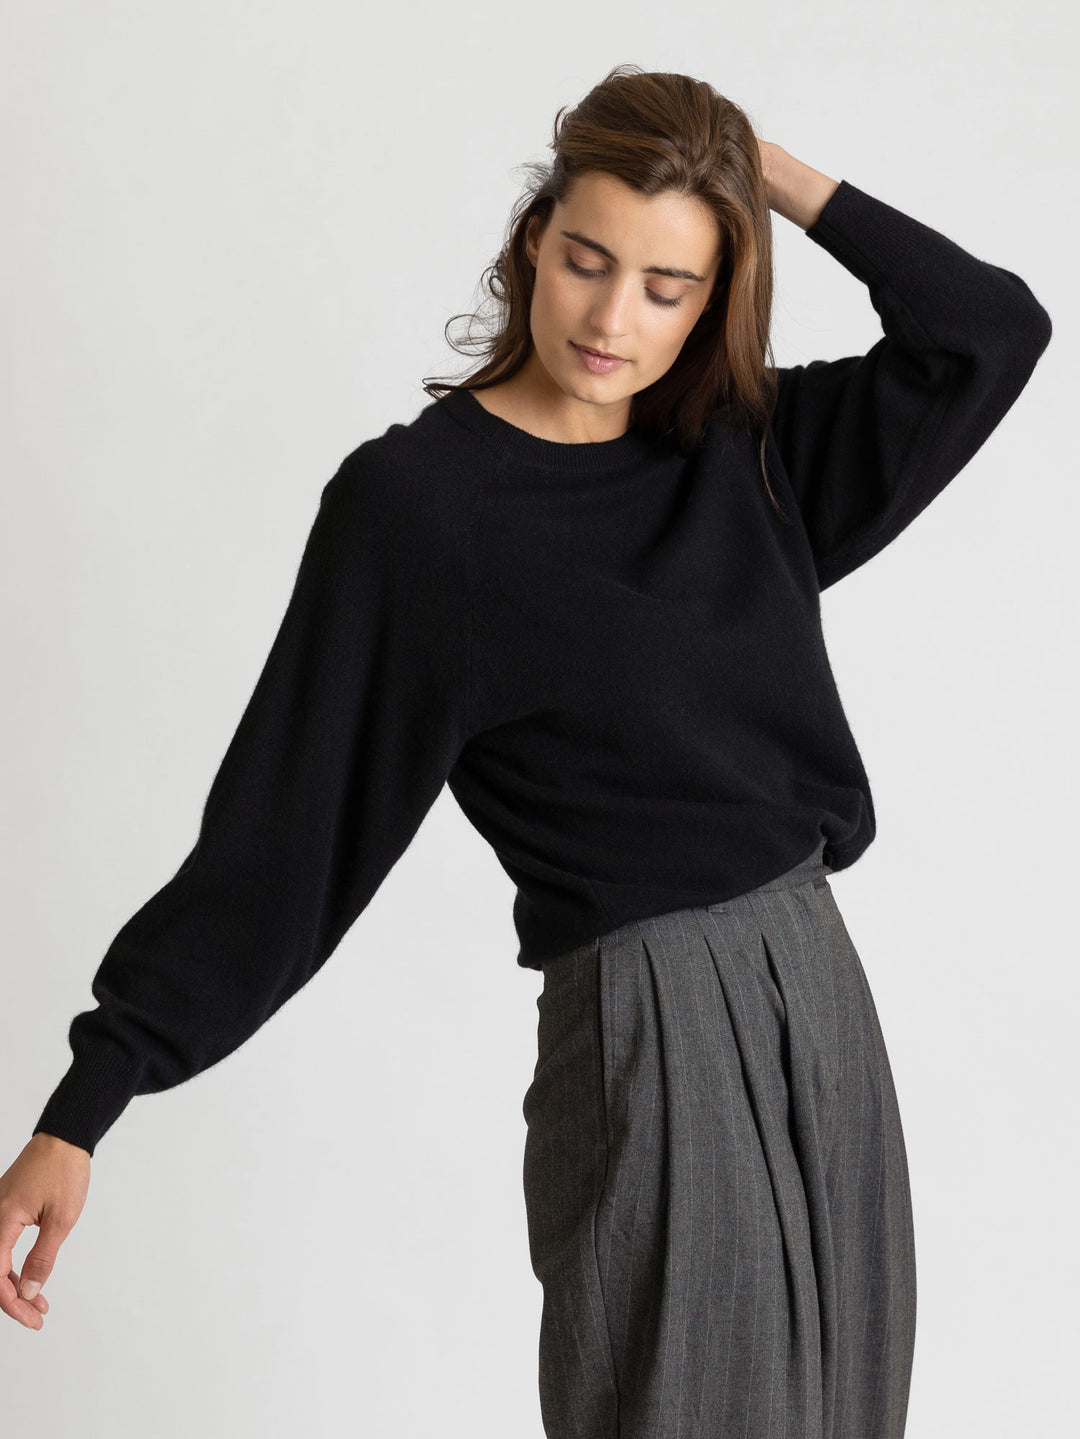 Oversized black cashmere sweater Embla, 100% cashmere from kashmina, Scadinavian design